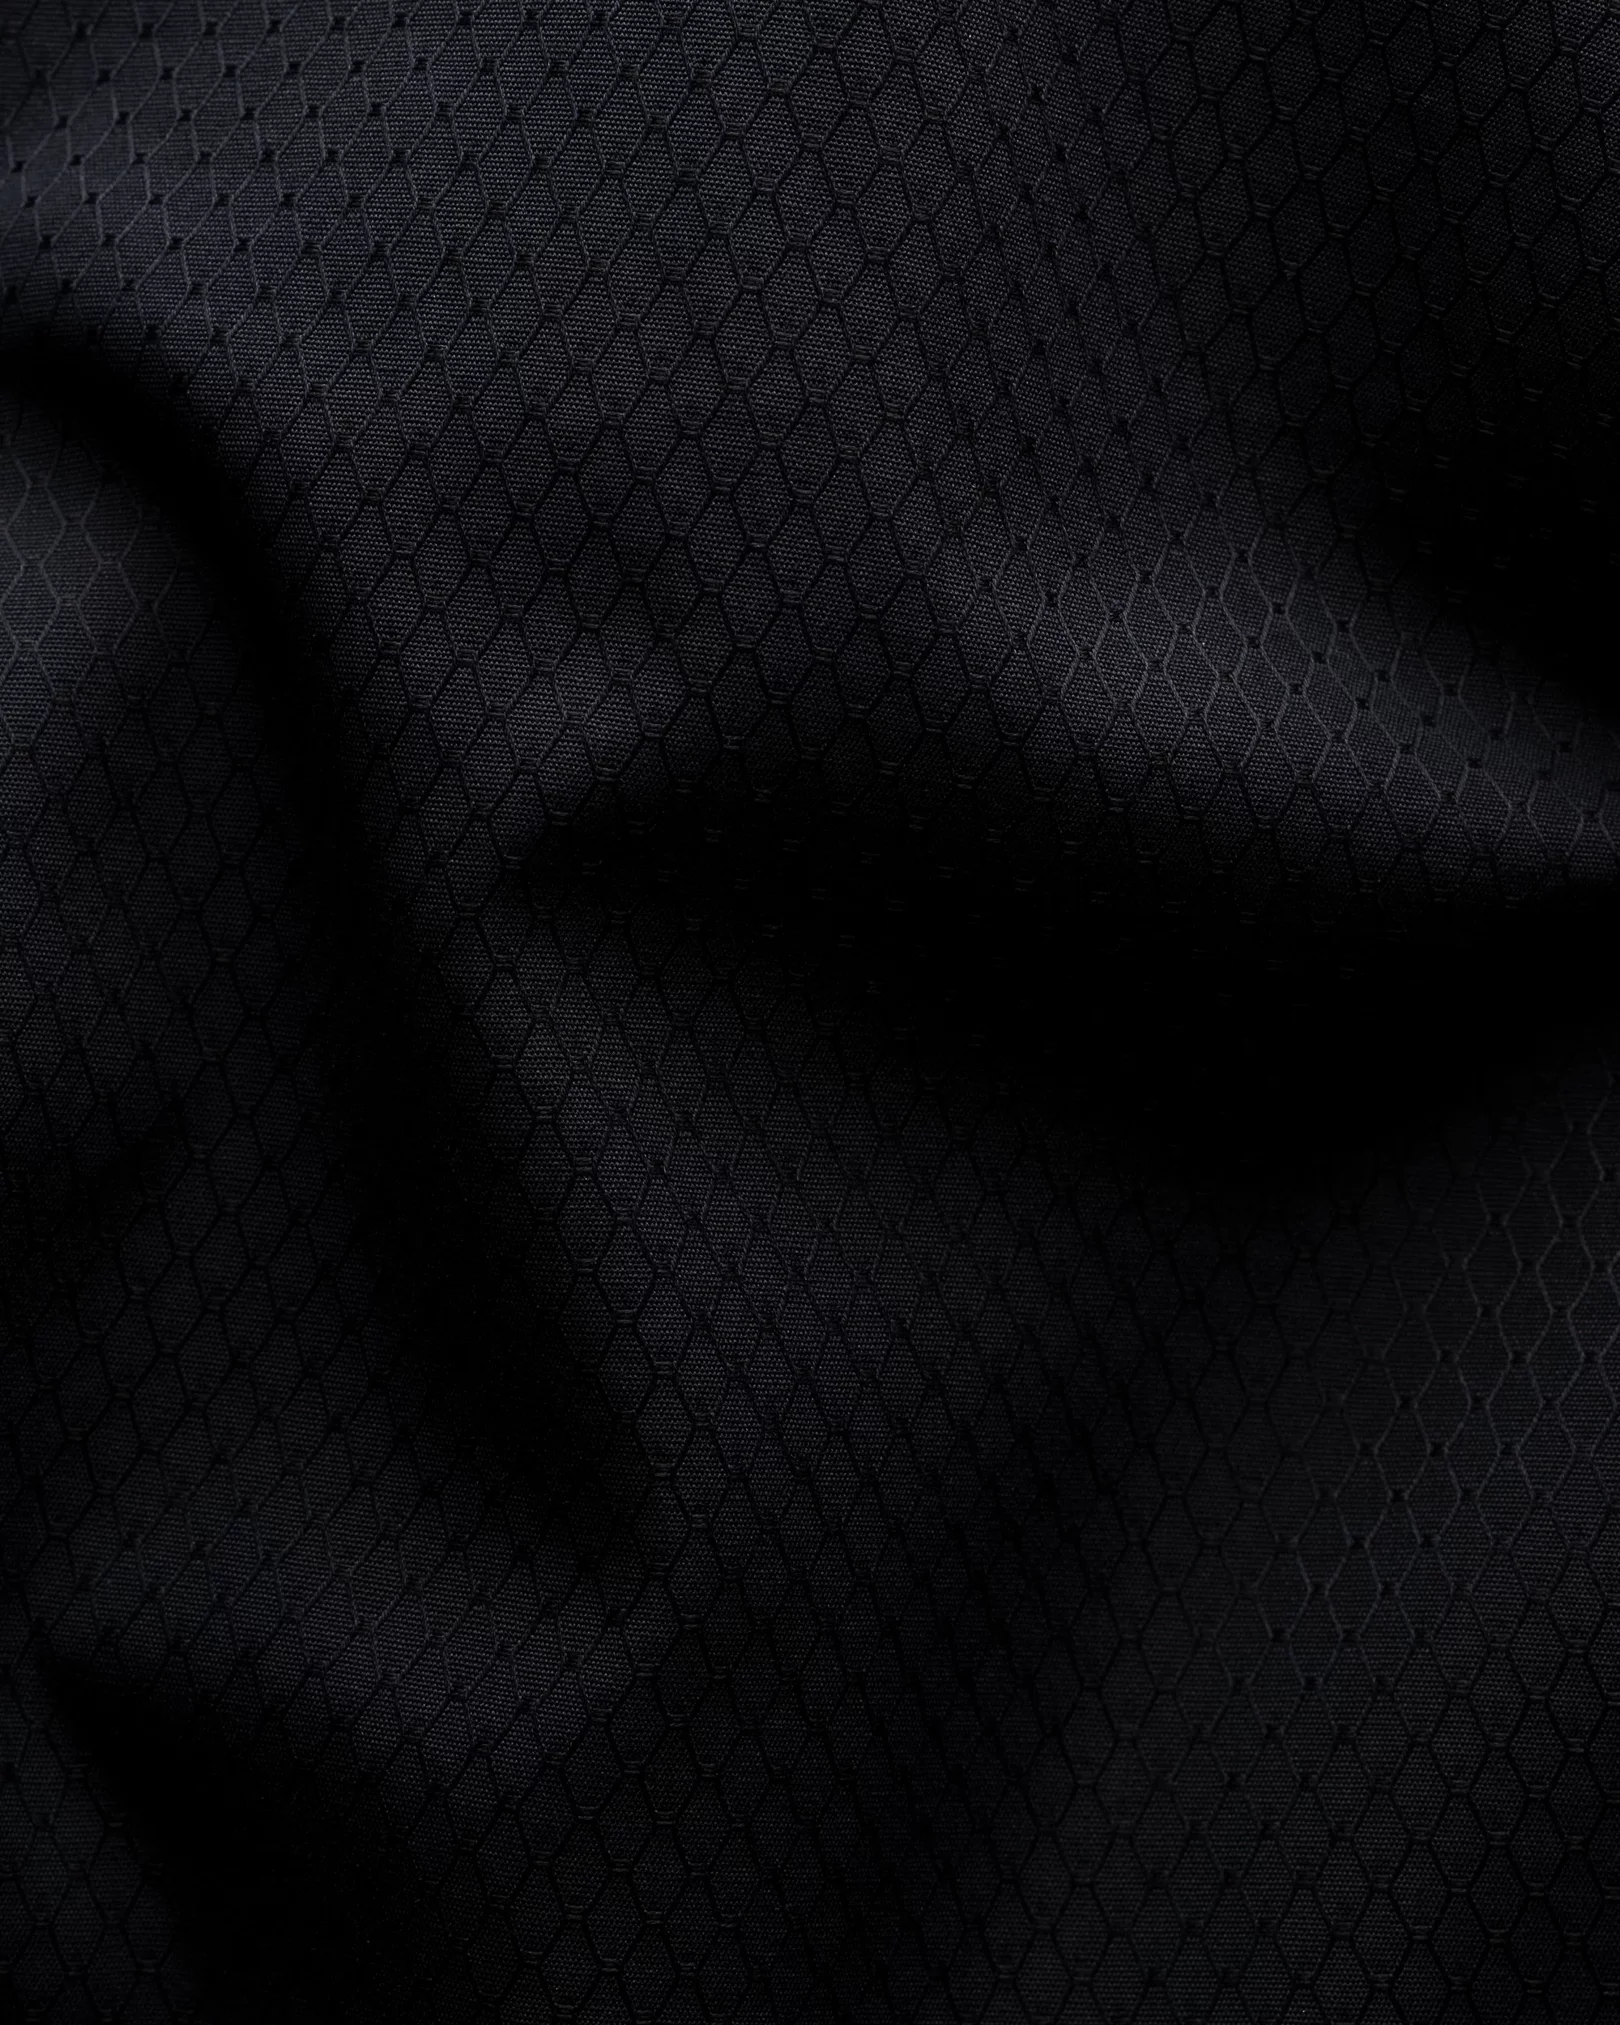 Eton - Black Geometric Print Dobby Tuxedo Shirt